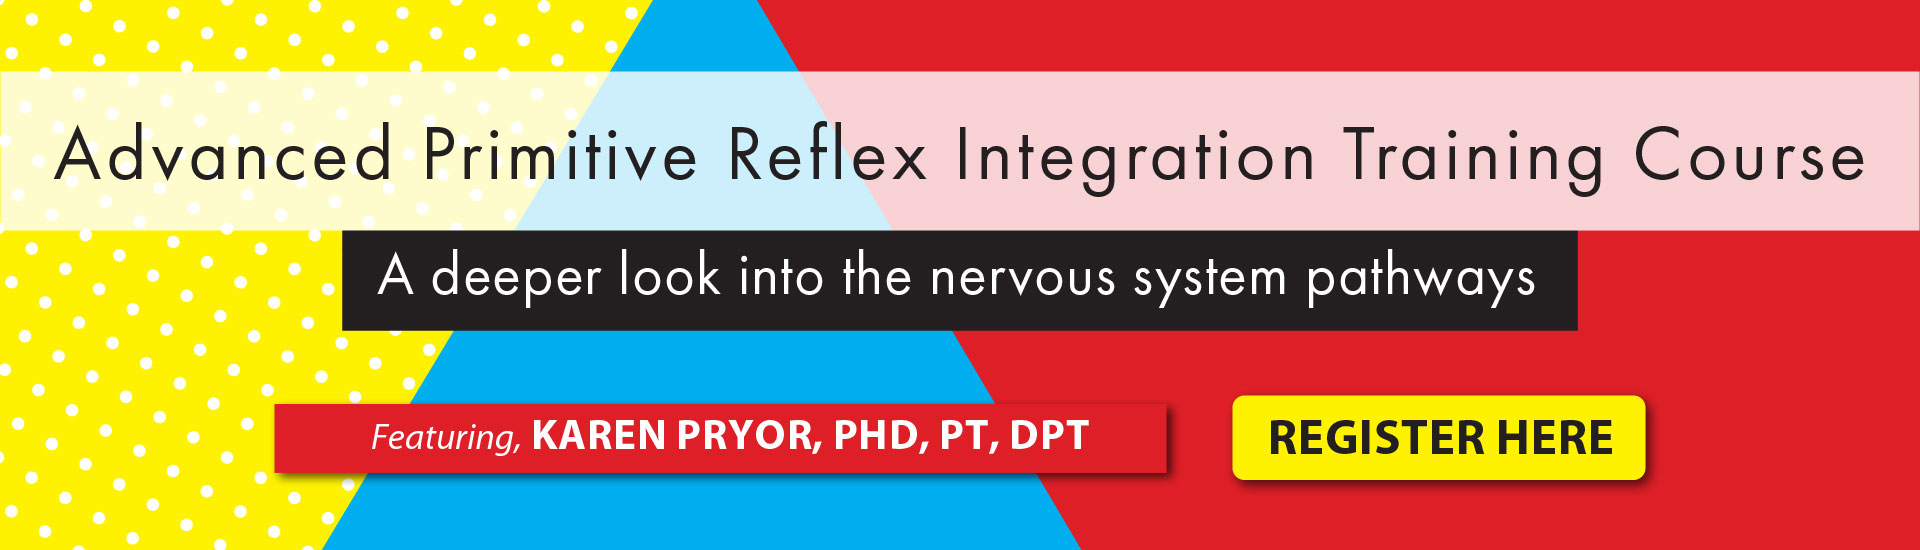 Advanced Primitive Reflex Integration Training Course